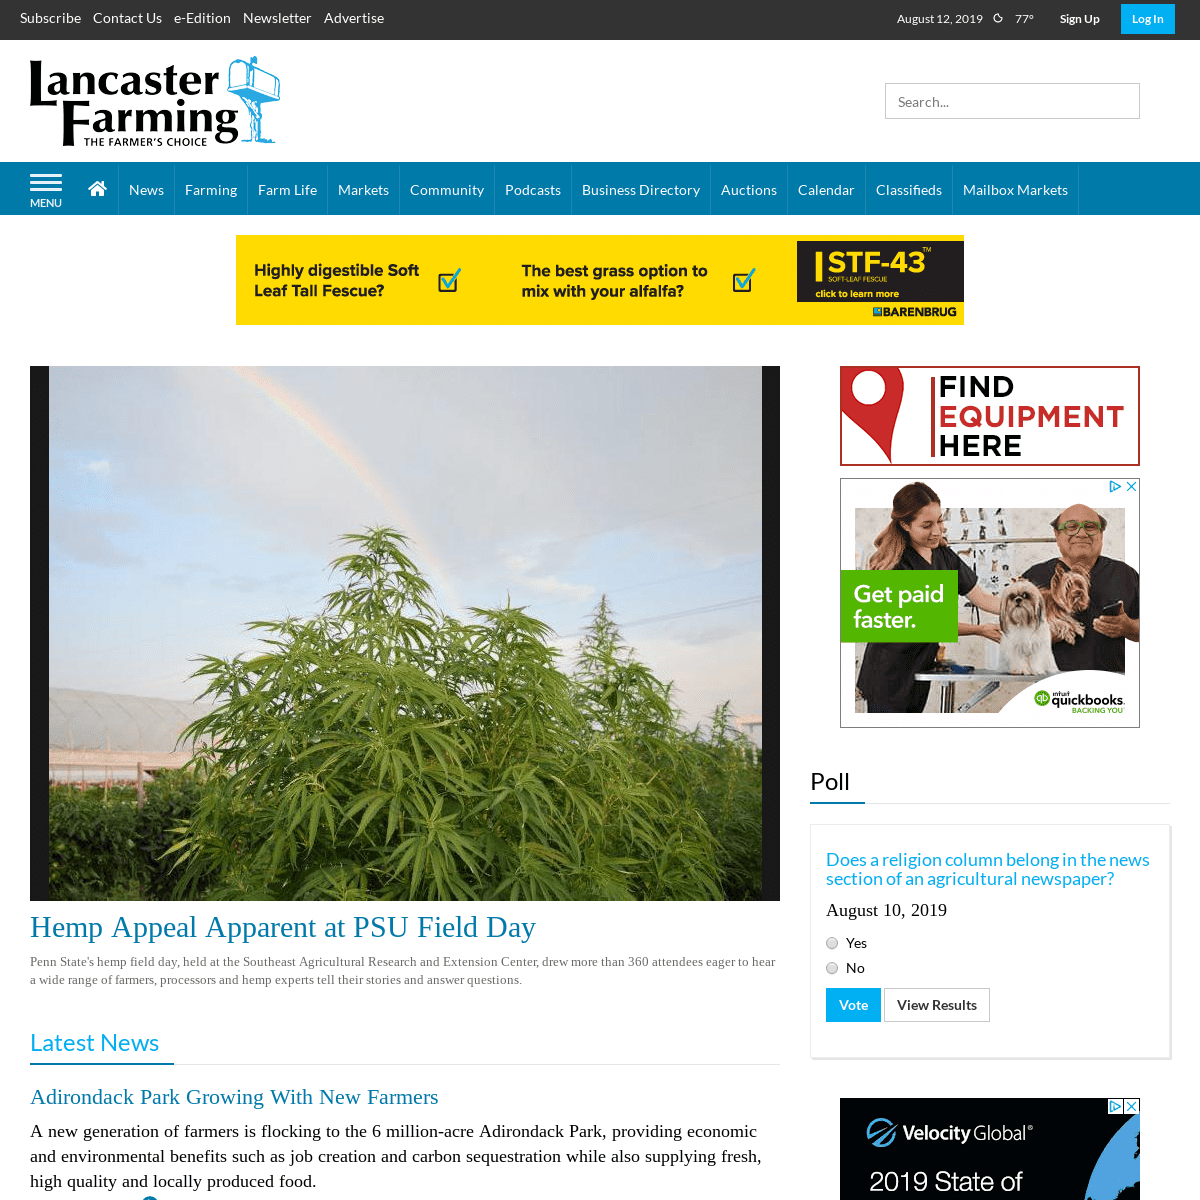 lancasterfarming.com | The Farmer's Choice